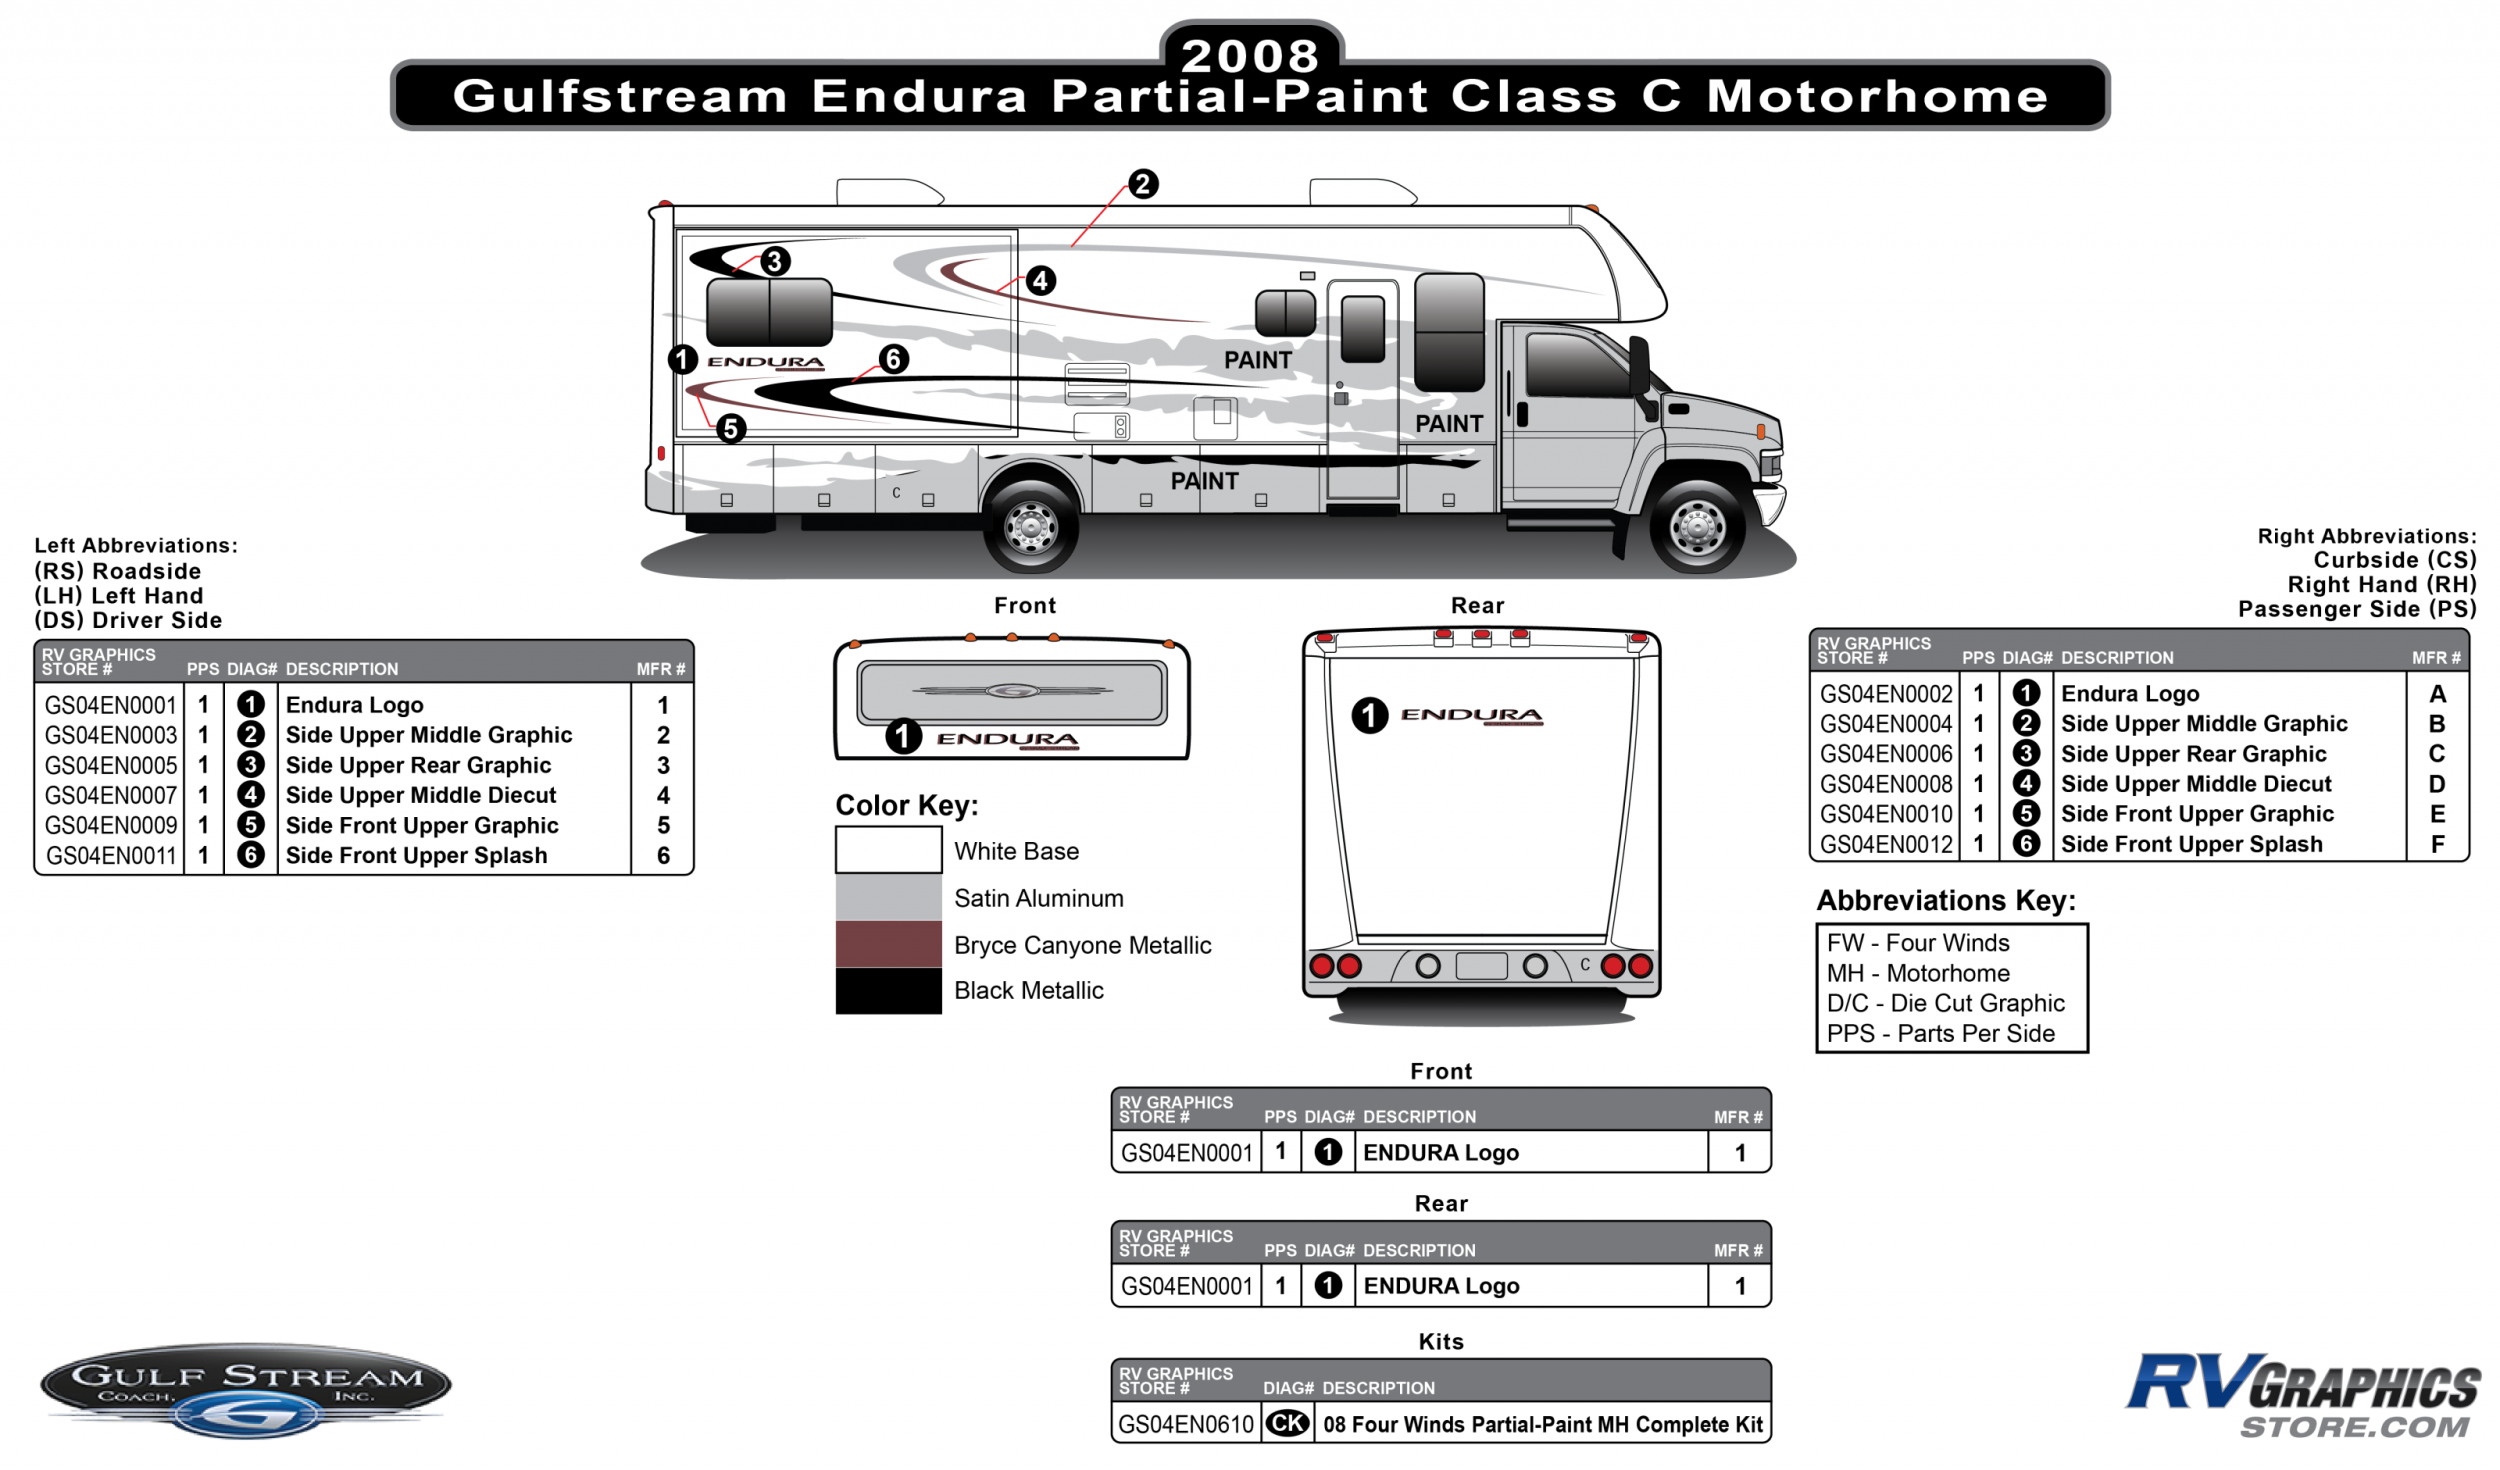 Endura - 2004 Endura Class C Motorhome